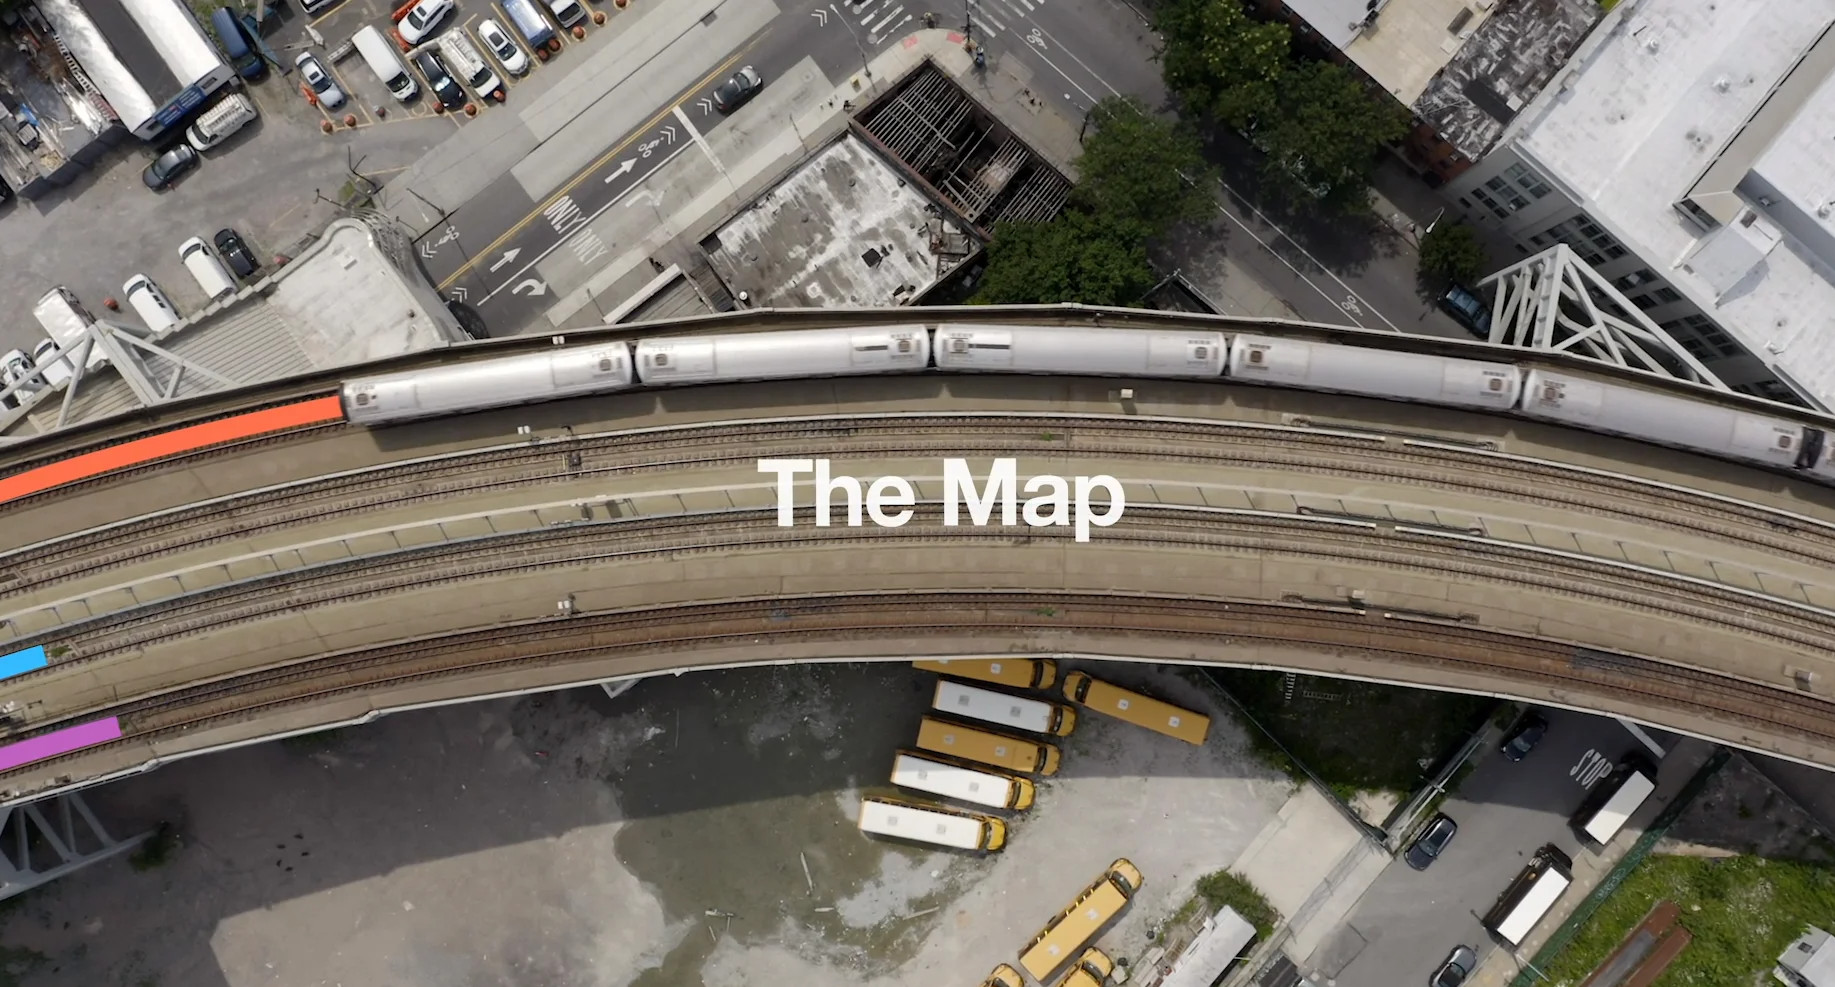 More information about "The Map: Ντοκυμαντέρ μικρού μήκους για τον επανασχεδιασμό του χάρτη του μετρό της Νέας Υόρκης"